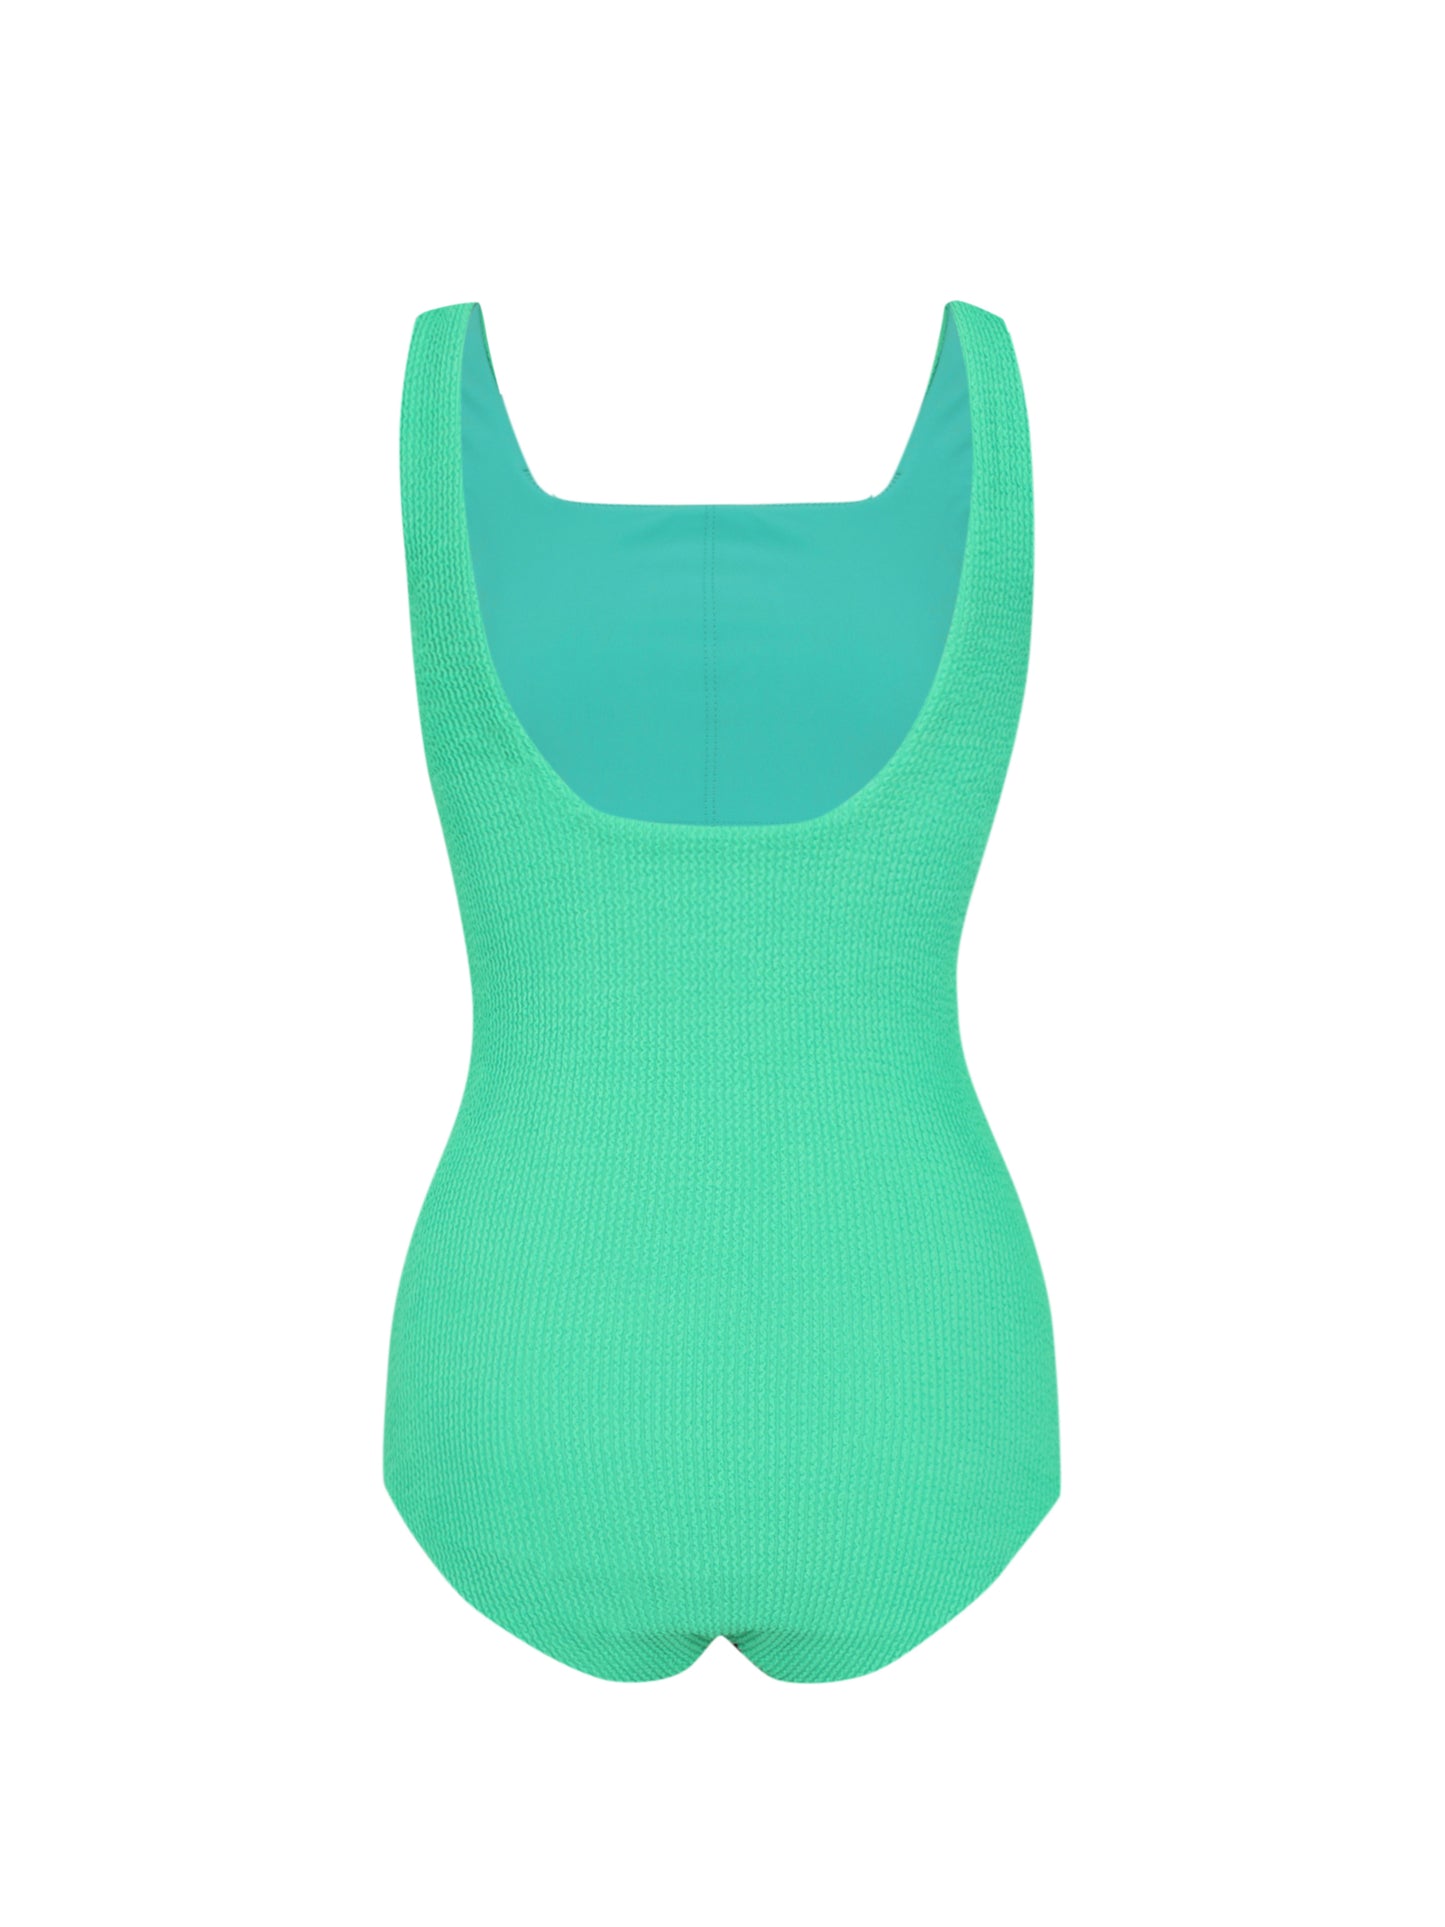 Crinkle One-Piece Swimsuit, Jade Green